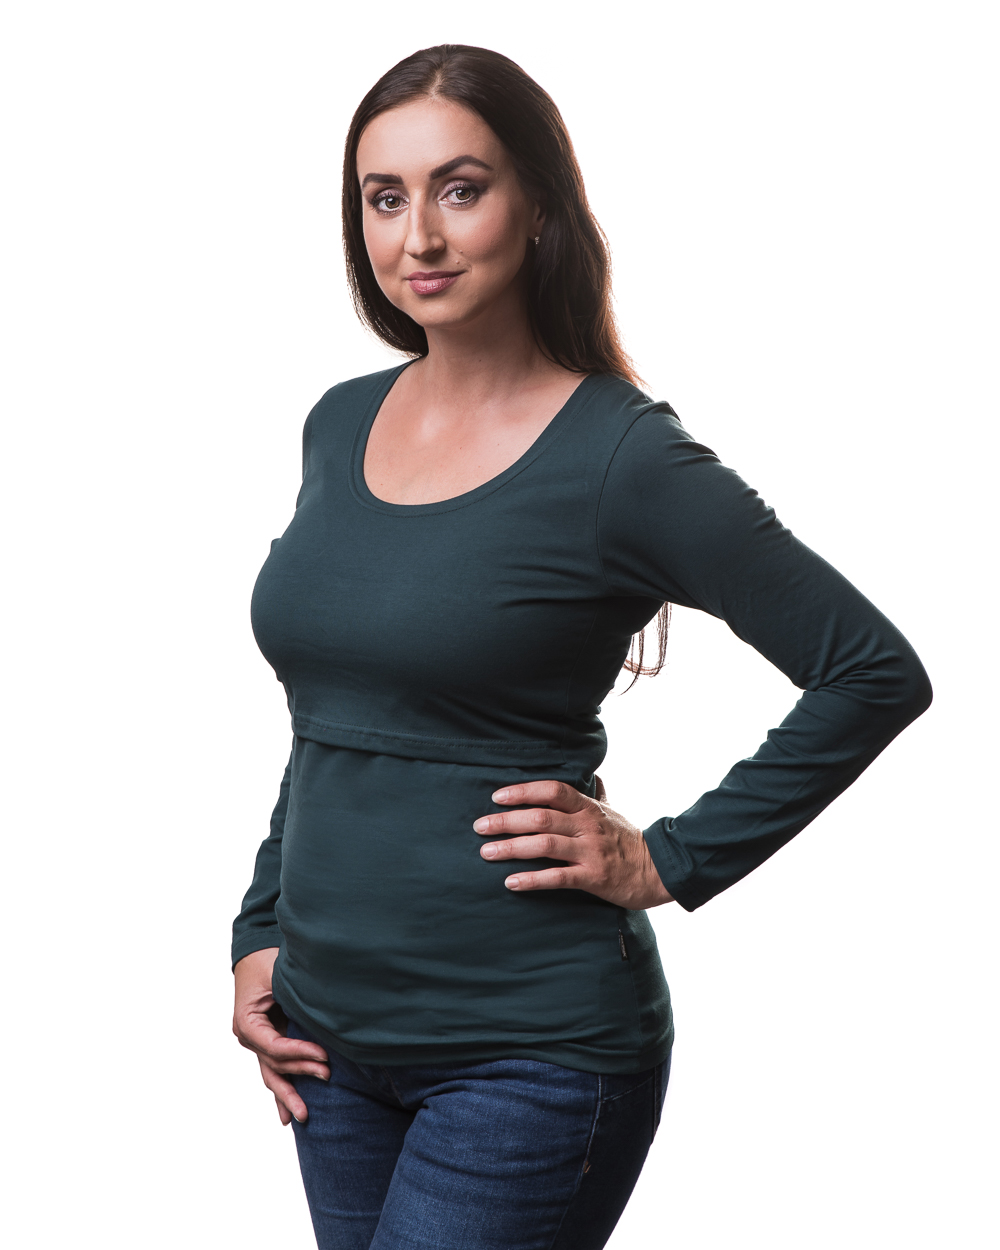 Breast-feeding T-shirt Katerina, long sleeves, dark green